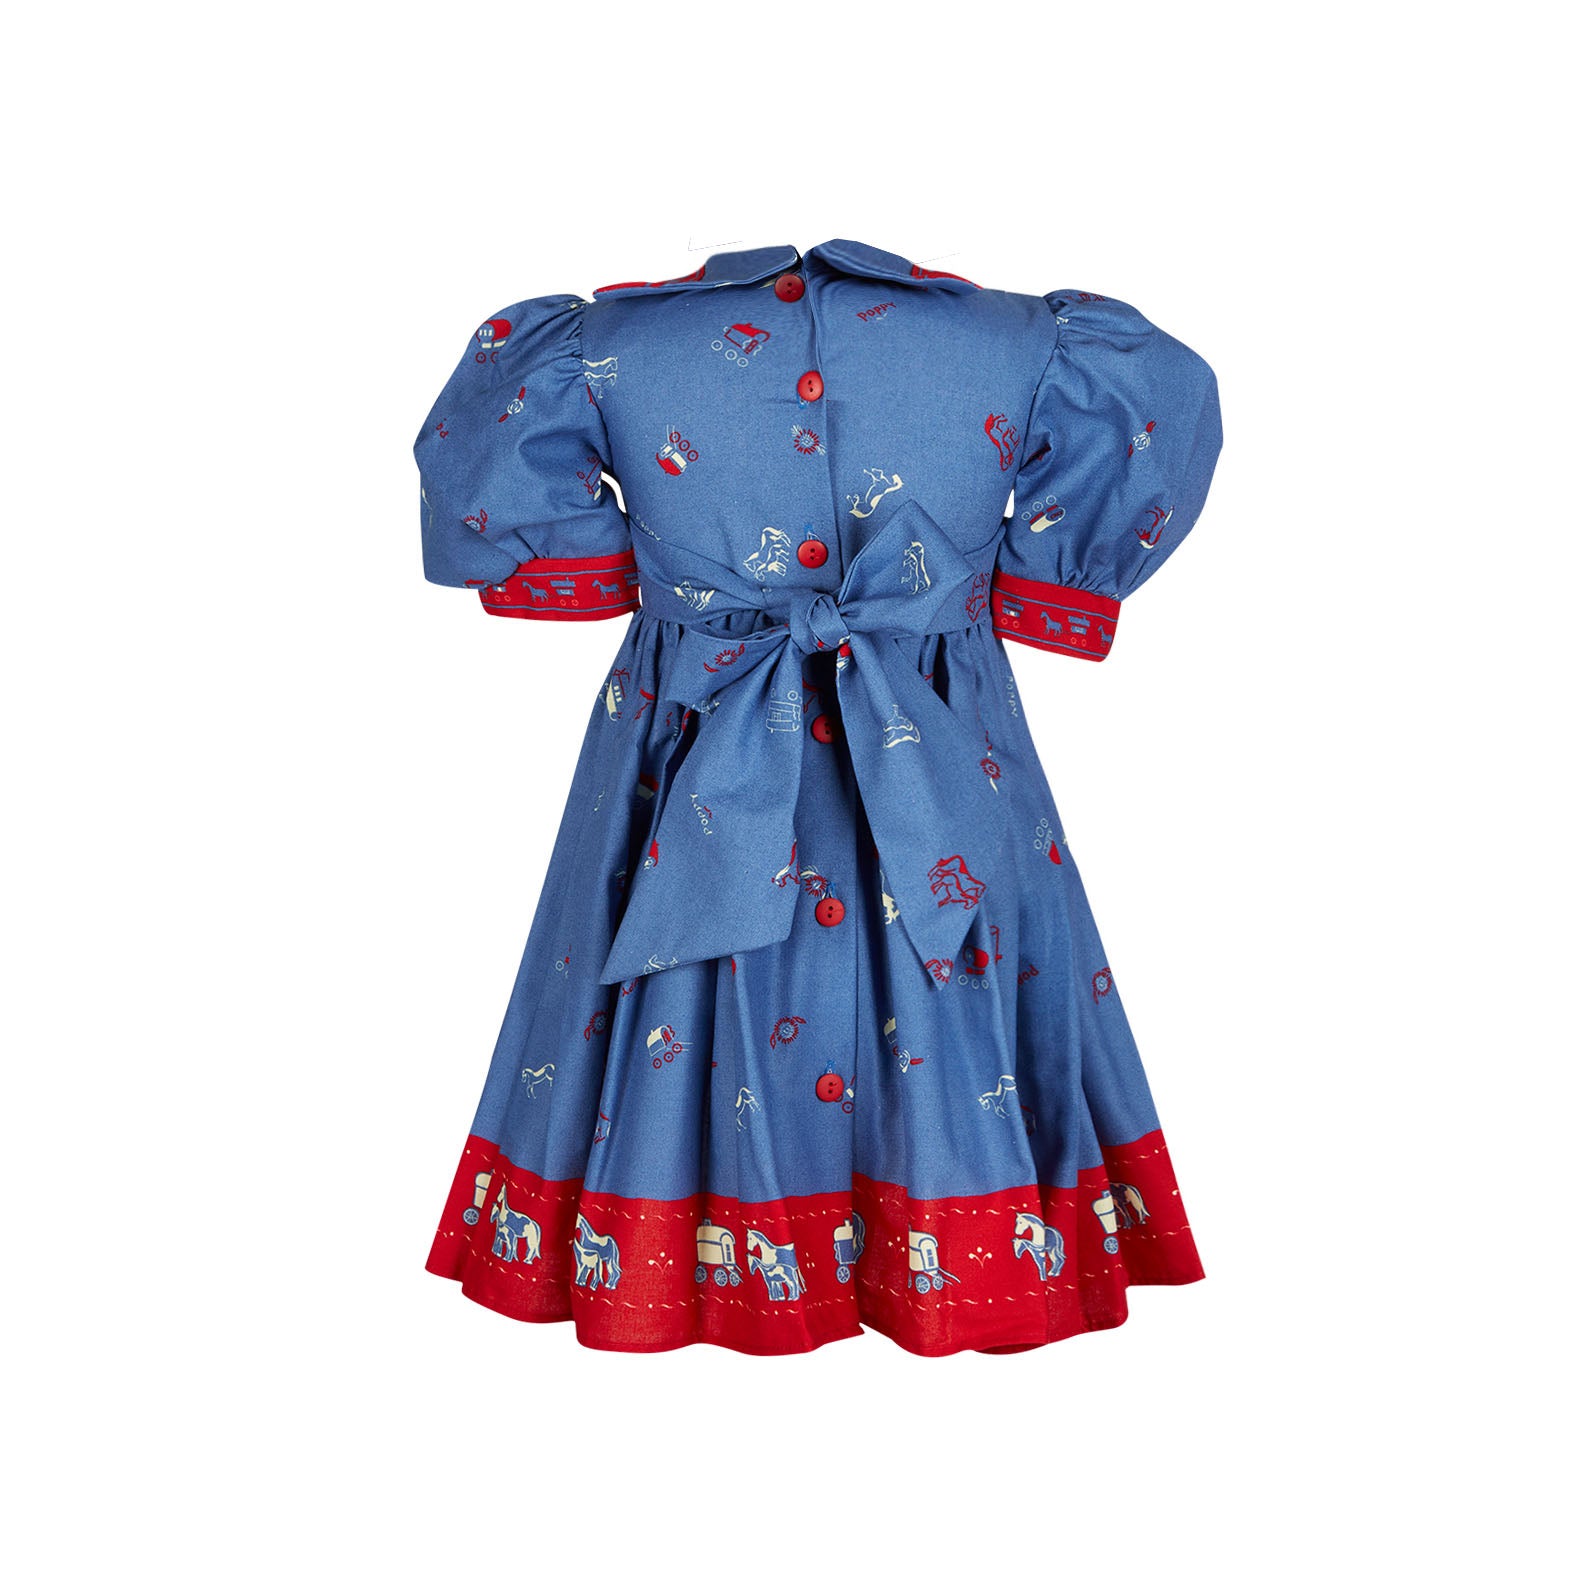 Archive Poppy - Charlie Dress - Royal Blue Gypsy Caravan